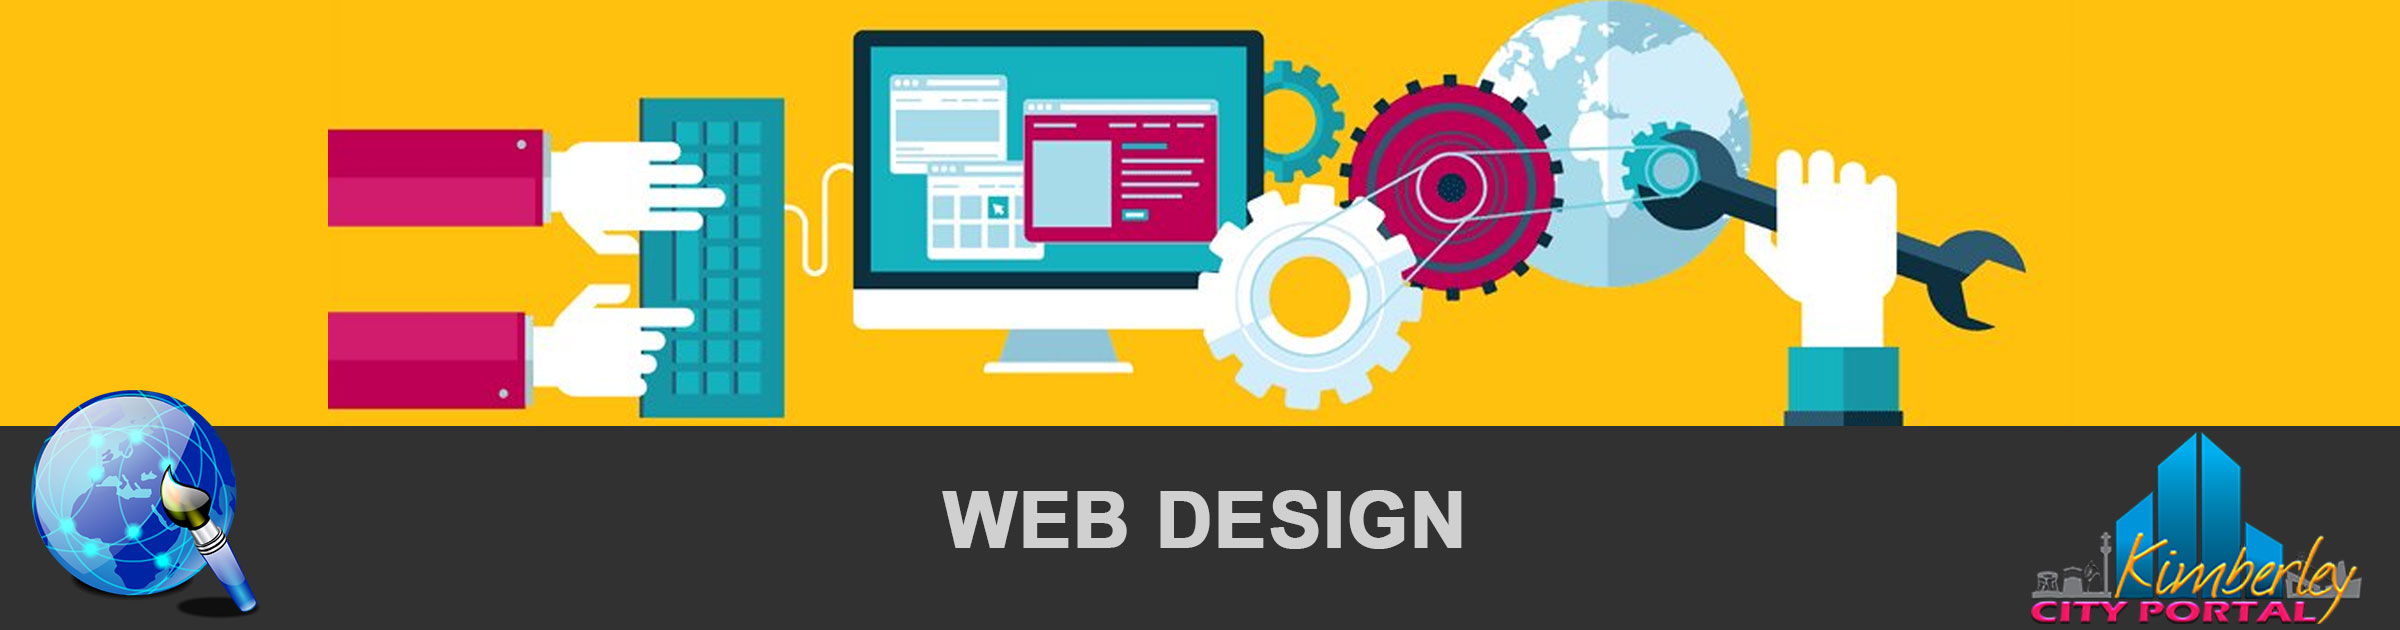 Web Design Companies & Web Designers